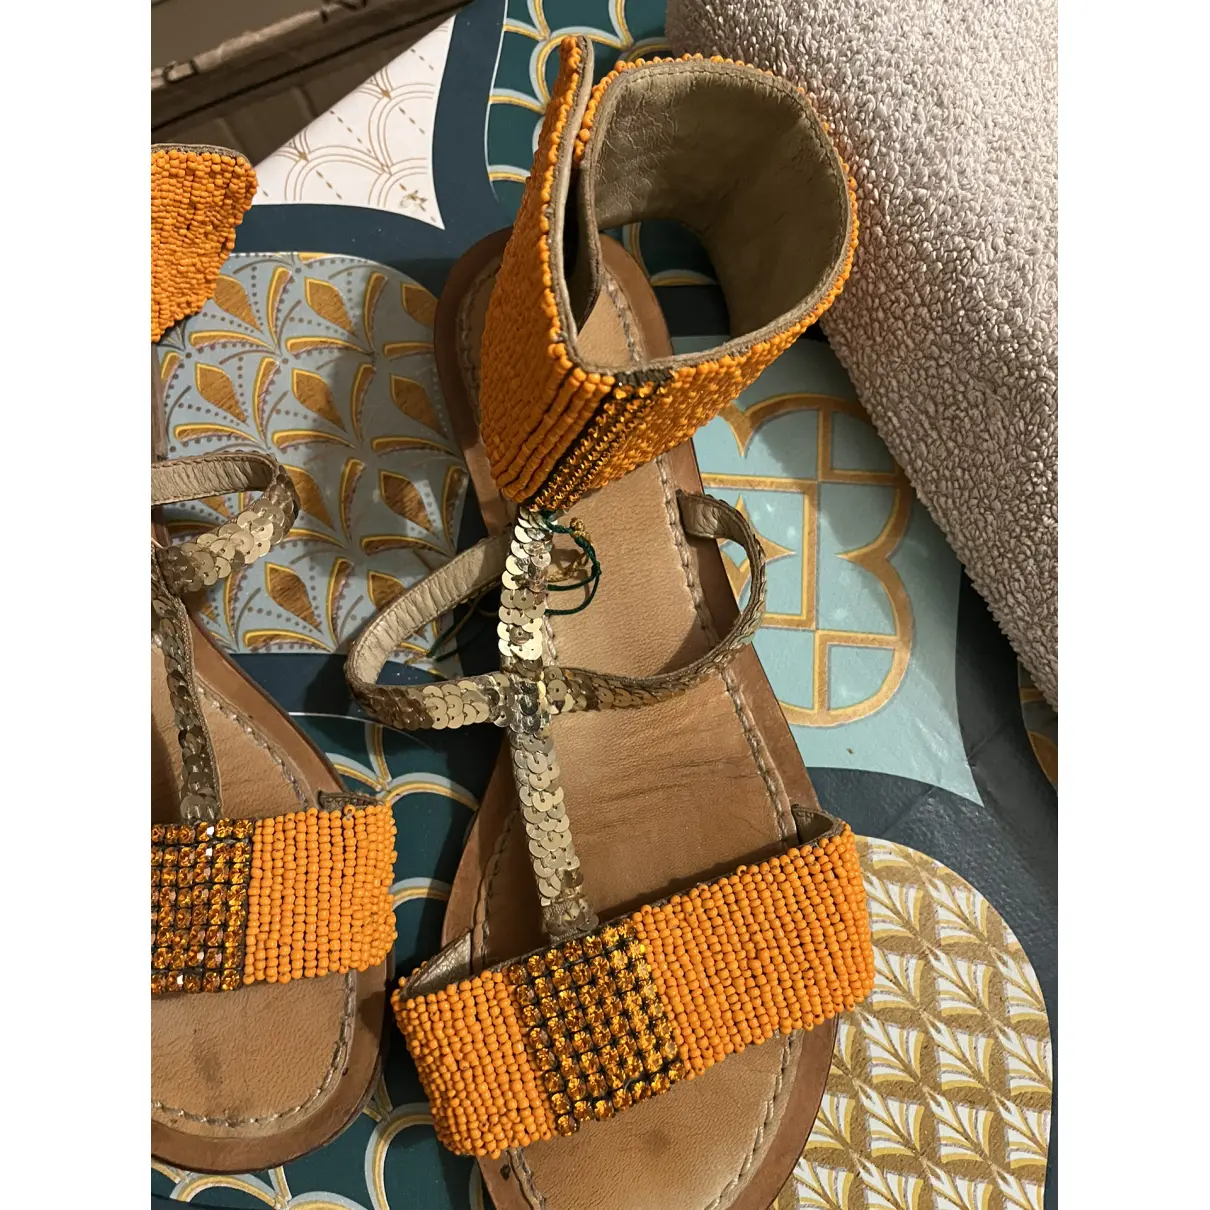 Buy RADÀ Leather sandal online